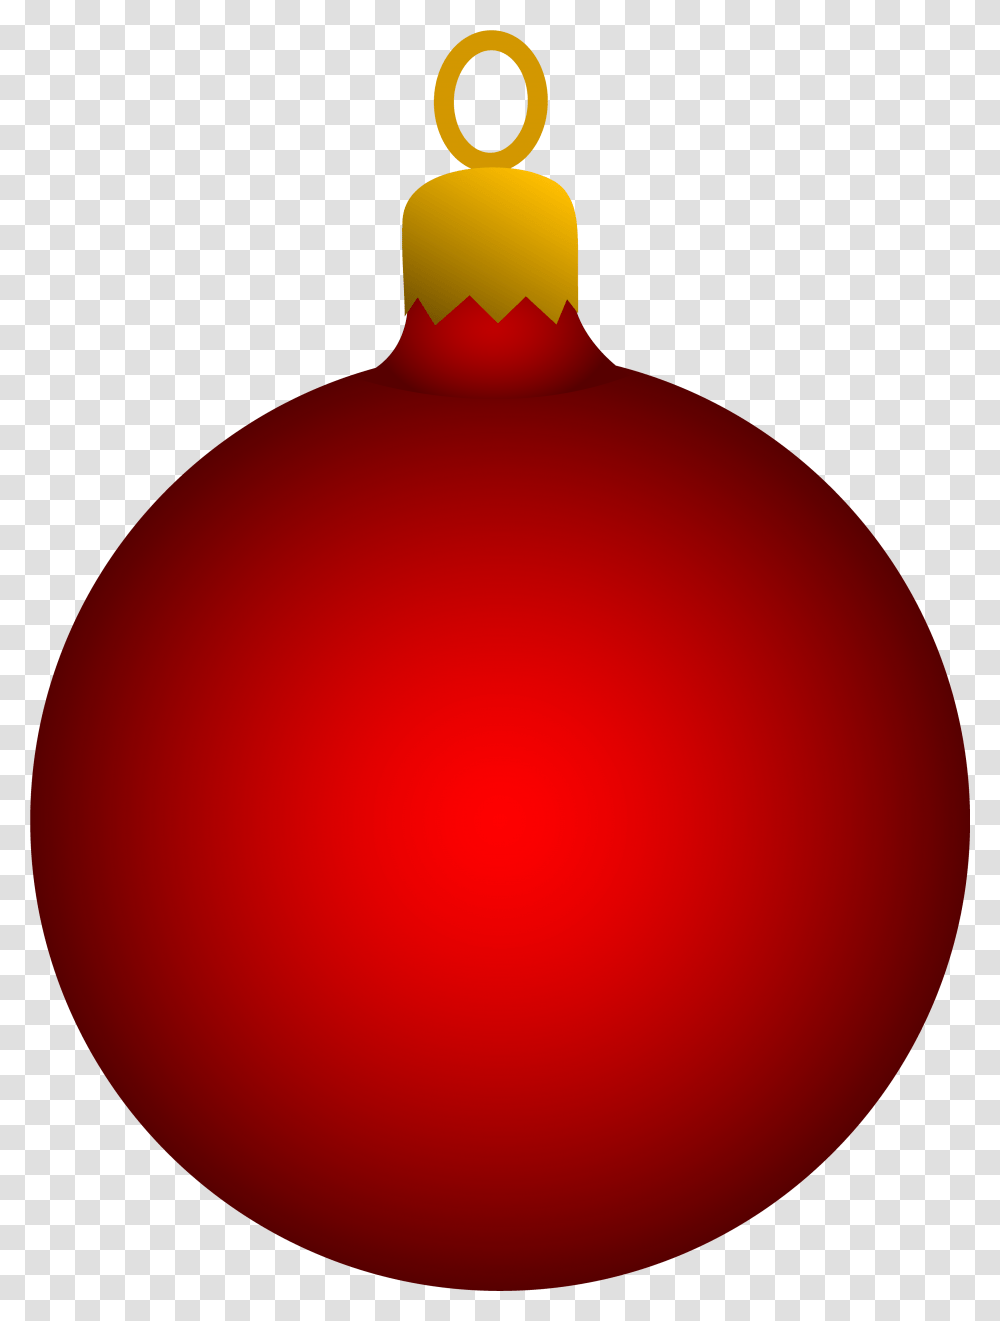 Christmas Ornaments Images Clip Art Ornament Clip Art, Balloon, Snowman, Outdoors, Nature Transparent Png